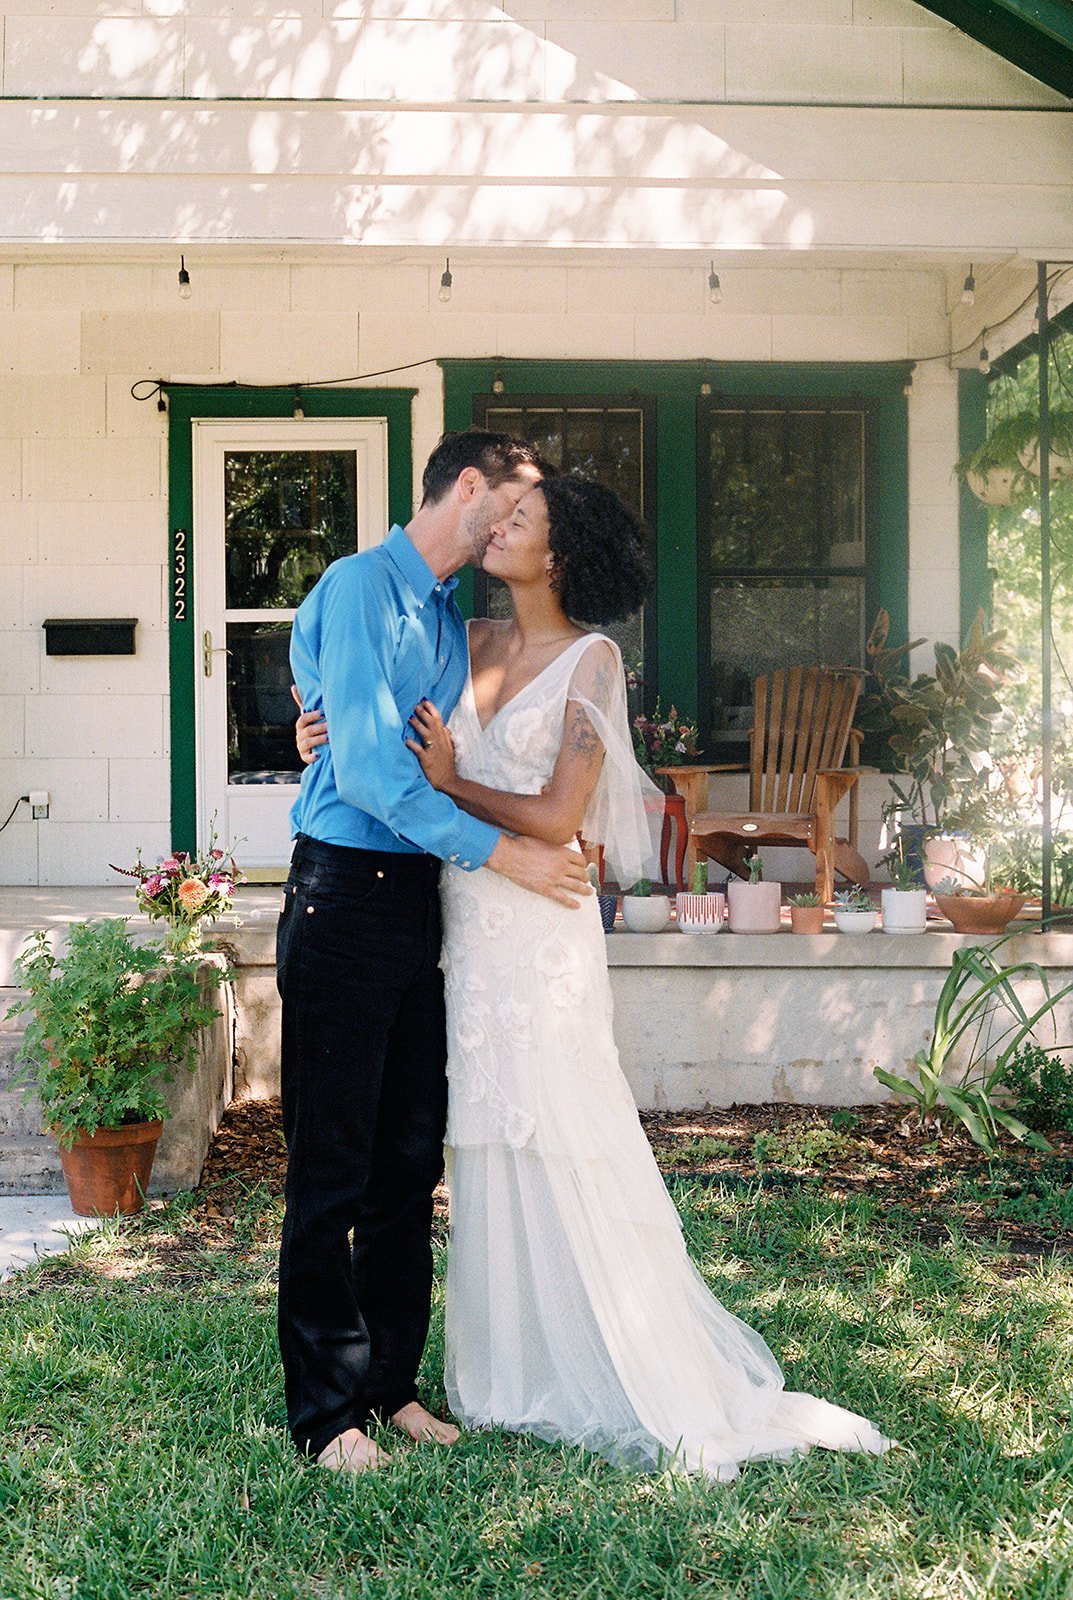 Best-Austin-Wedding-Photographers-Elopement-Film-35mm-Asheville-Santa-Barbara-85.jpg